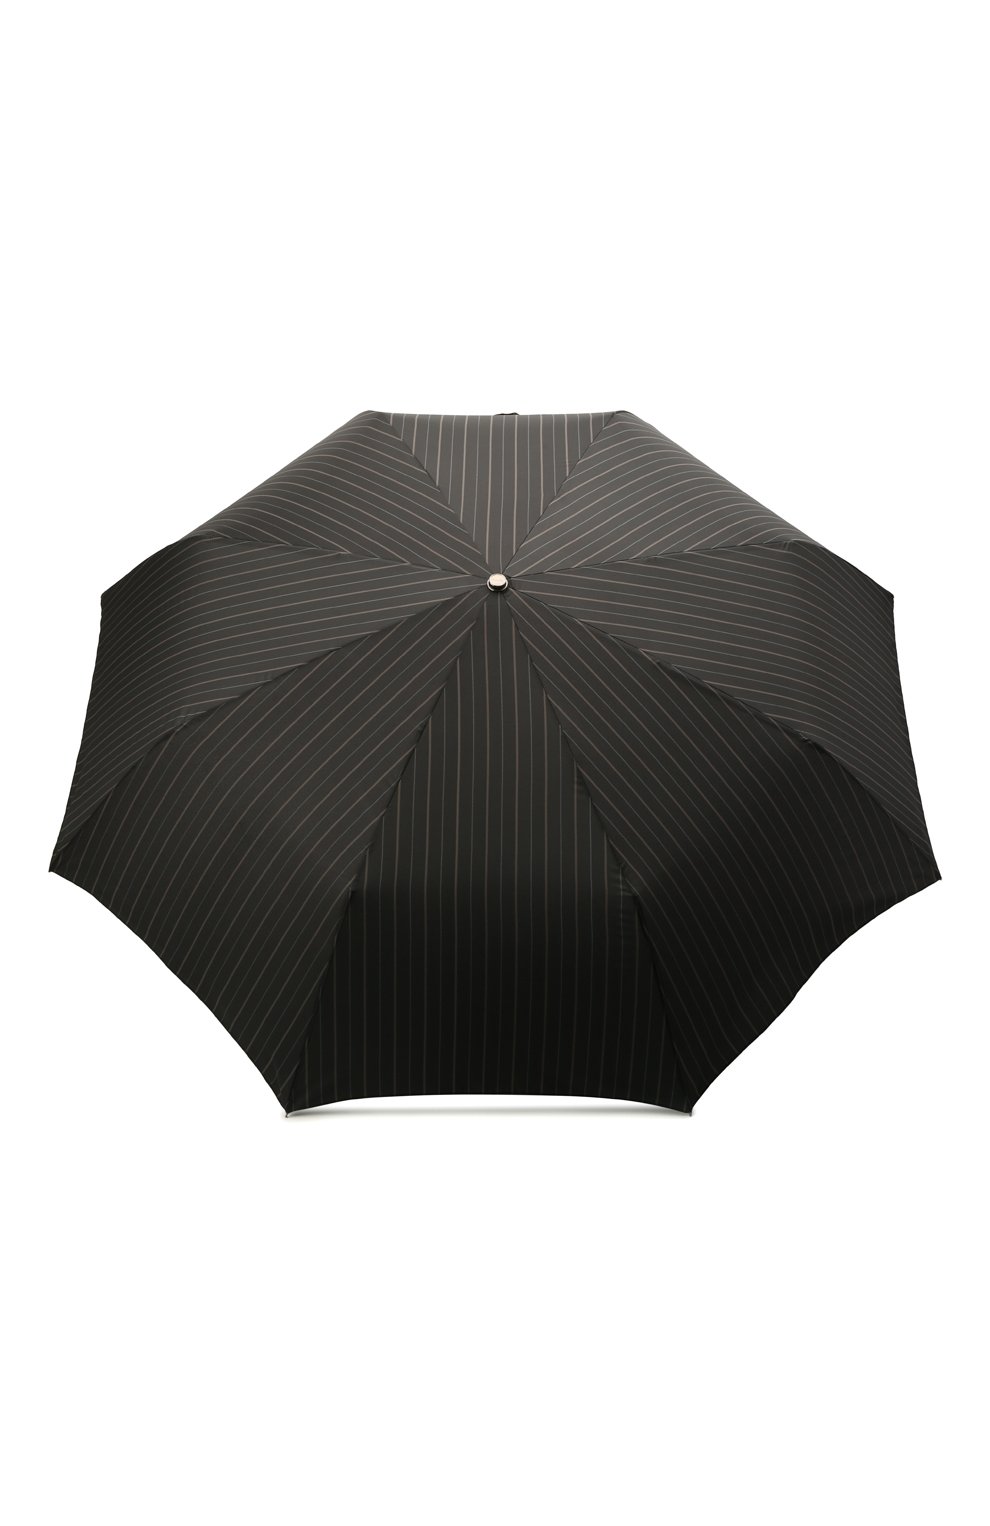 Мужской складной зонт DOPPLER темно-серого цвета, арт. 74367 N 1 | Фото 1 (Материал: Текстиль, Синтетический материал; Статус проверки: Проверена категория)